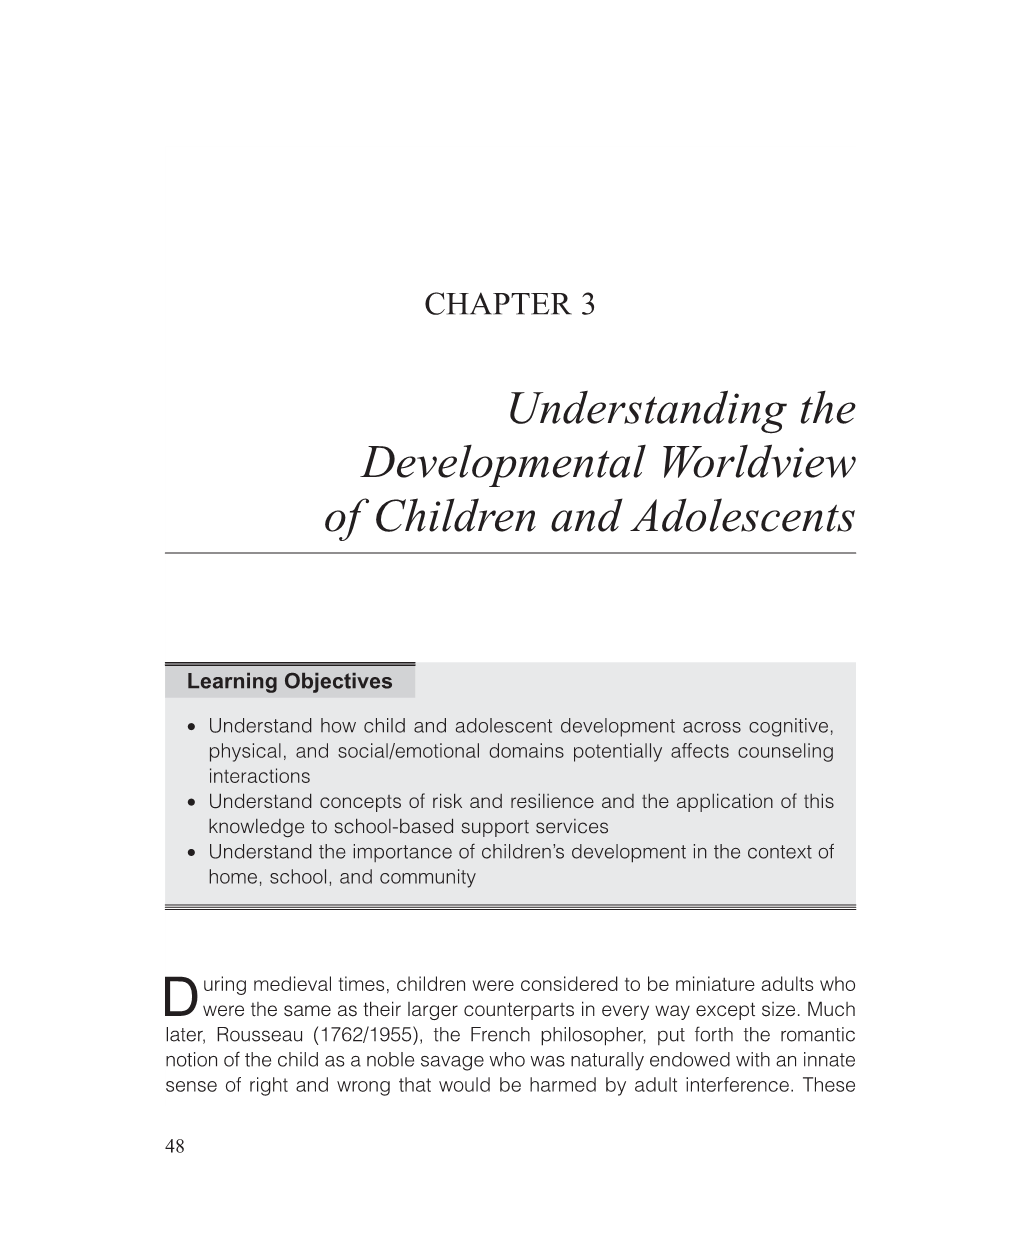 Understanding the Developmental Worldview of Children and Adolescents